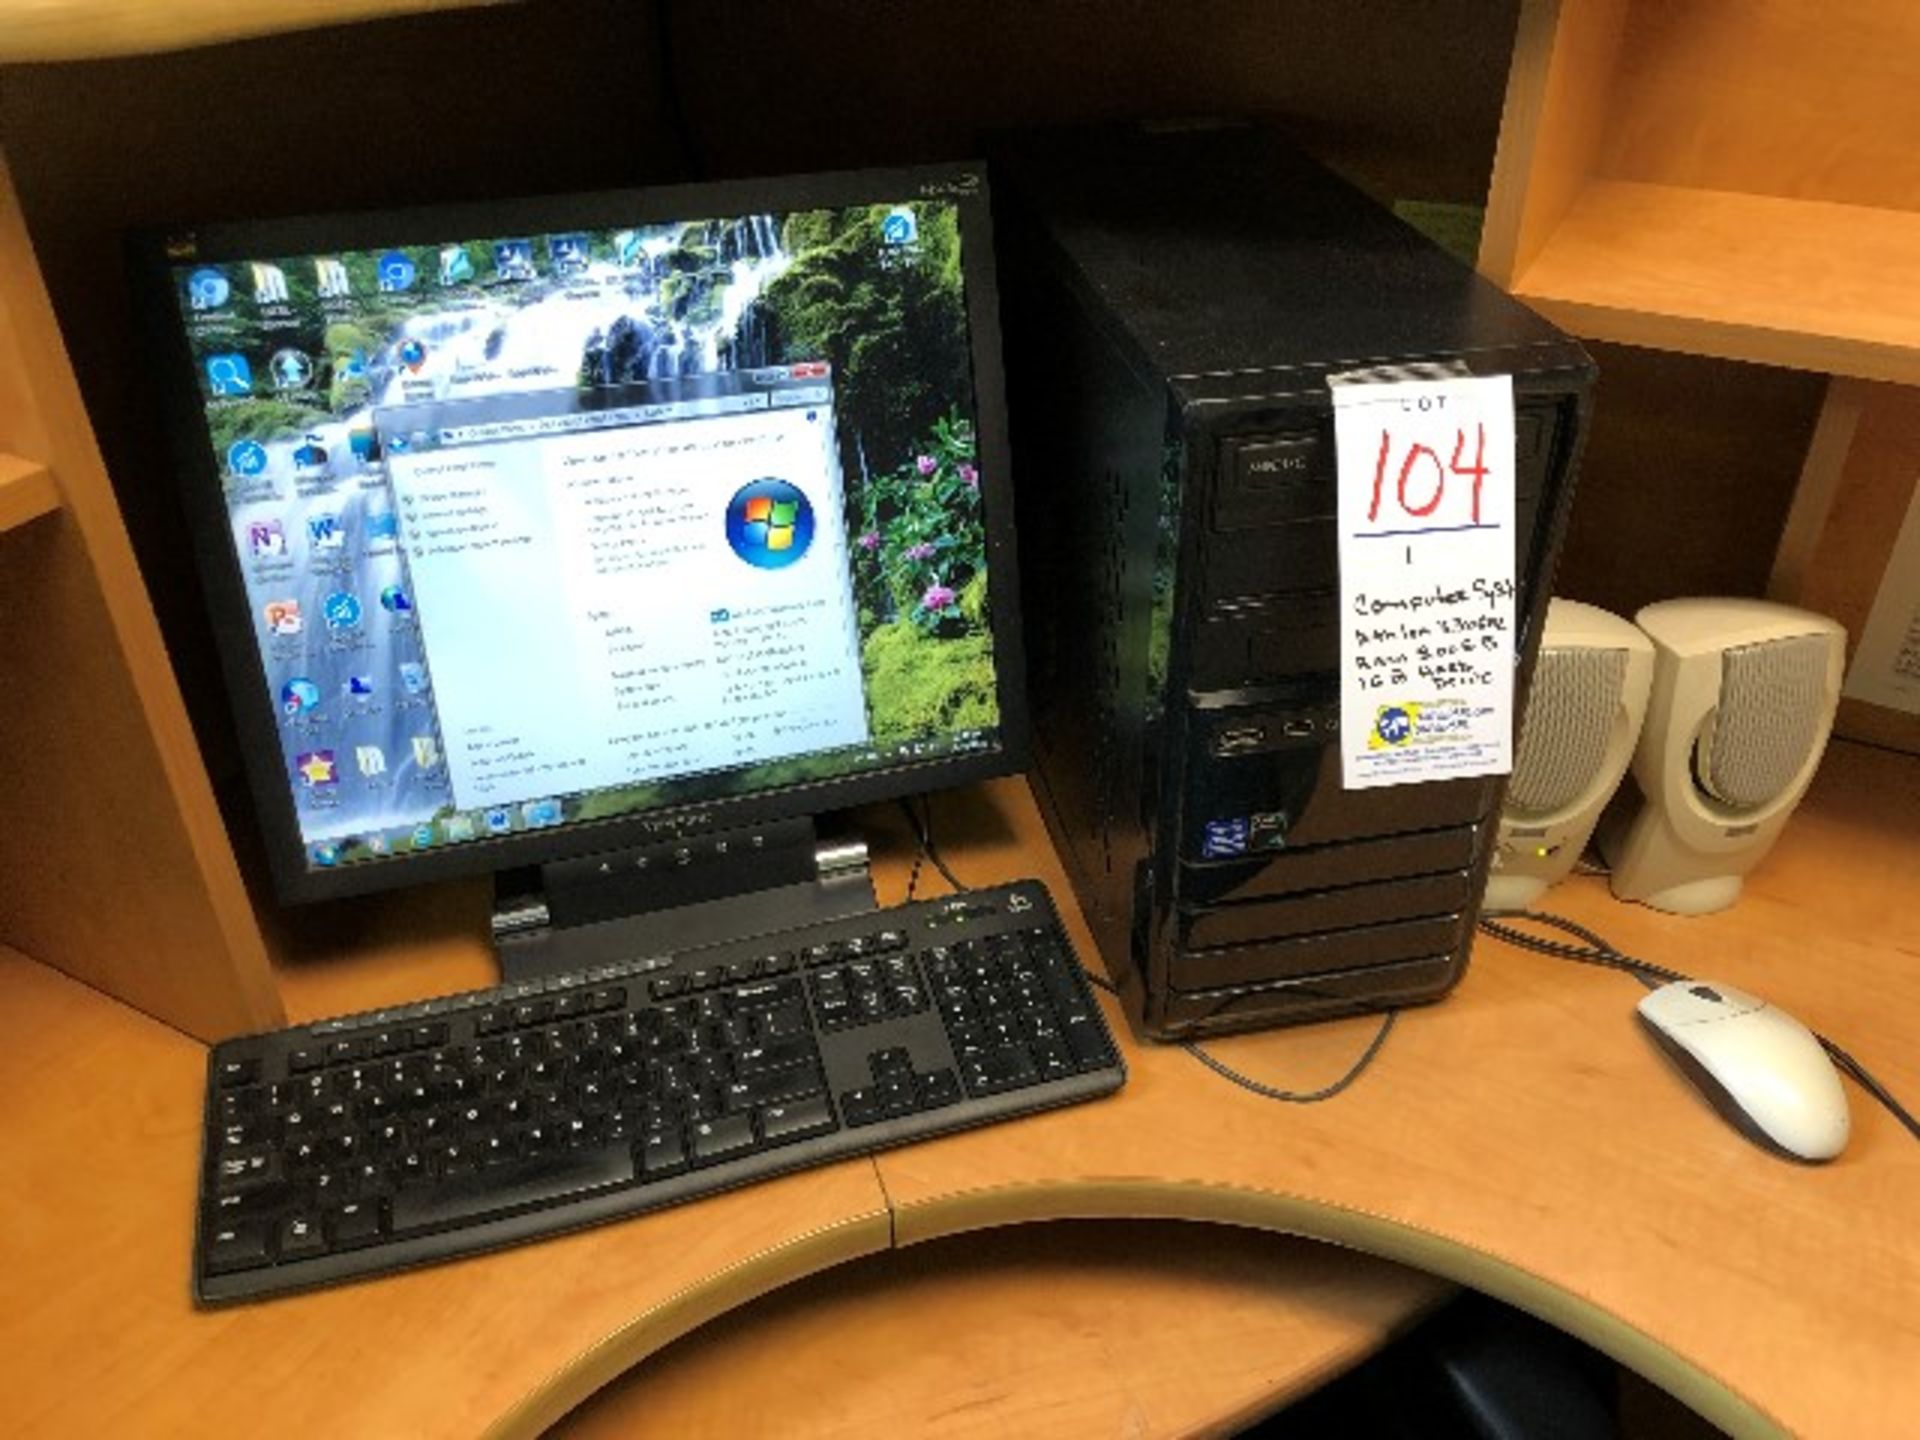 Computer system AMD Athlon II, 3.30GHz,8GB RAM,1GB HDD,monitor, keyboard, mouse,speakers